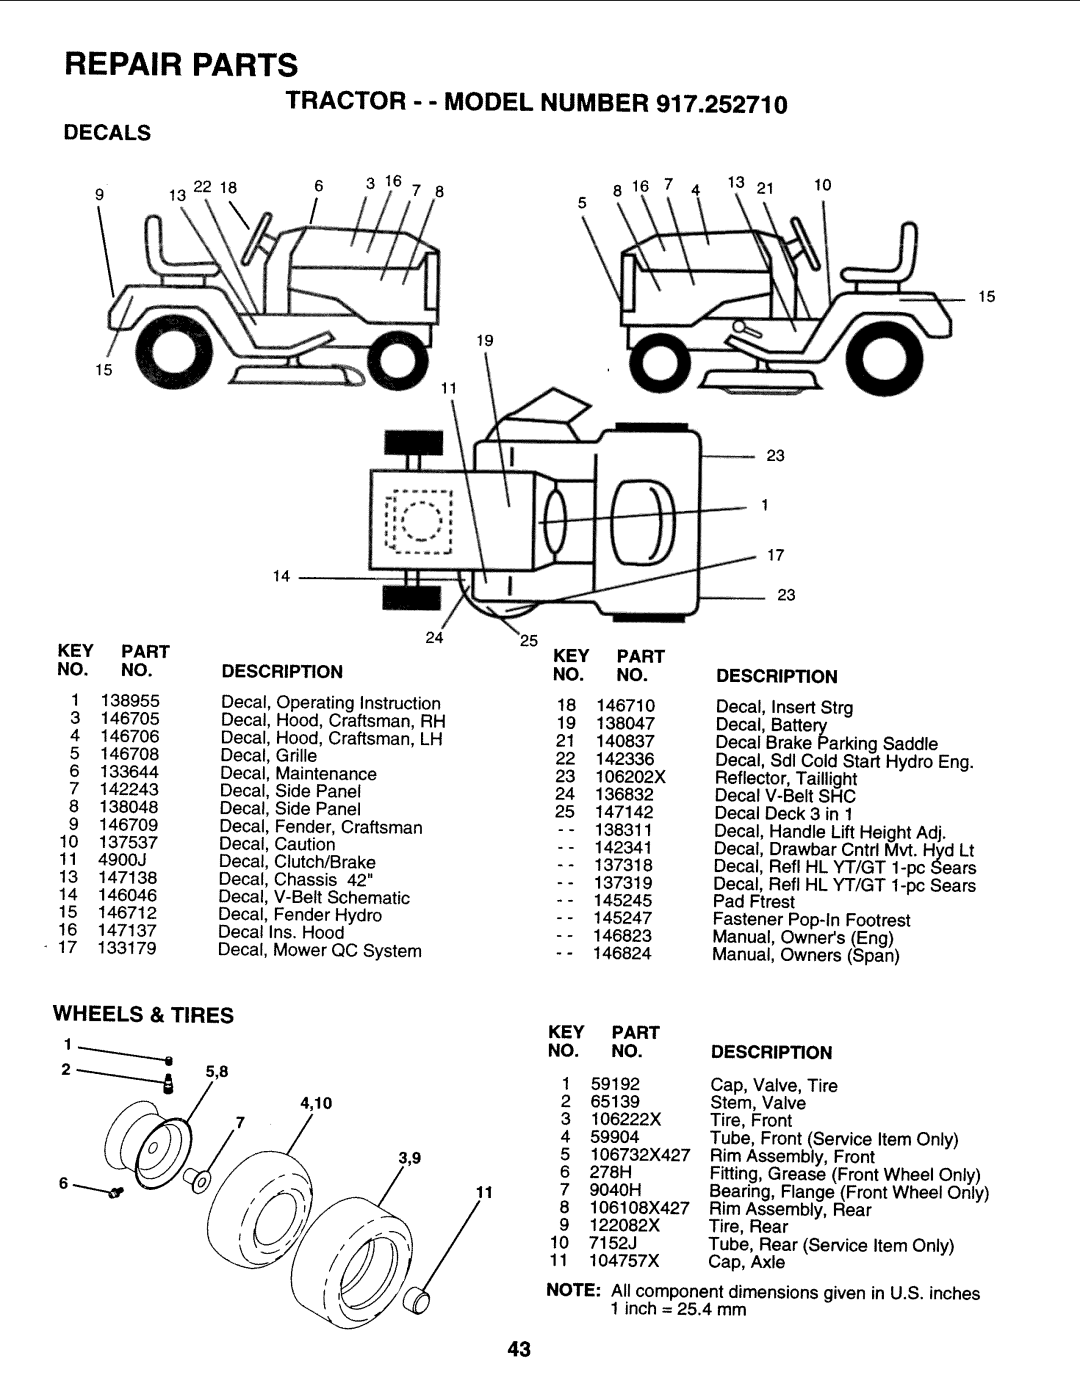 Sears 917.25271 owner manual Repair Parts, Tractor -- Model Number, Decals, Wheels & Tires, Description 